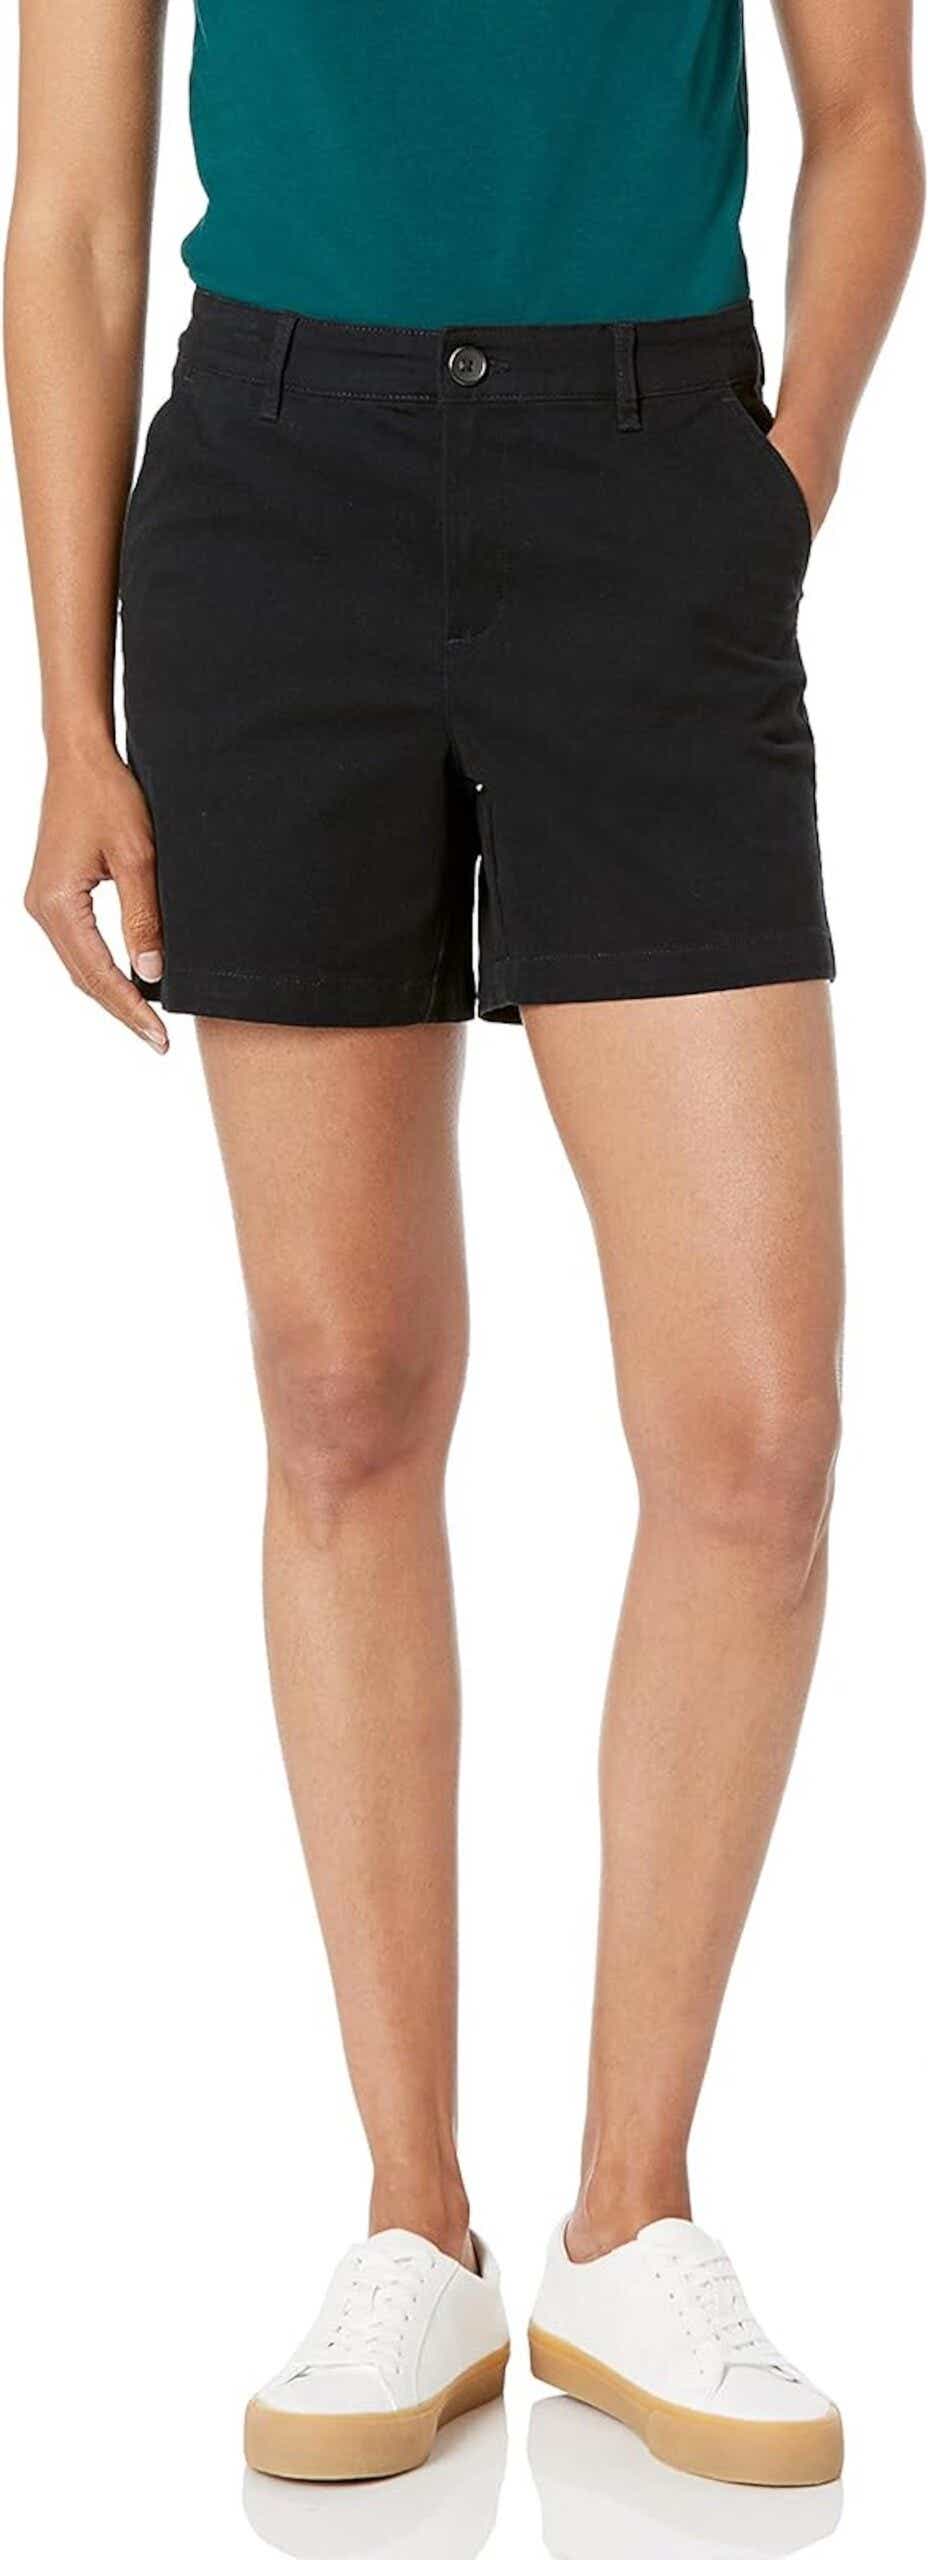 A pair of khaki shorts.